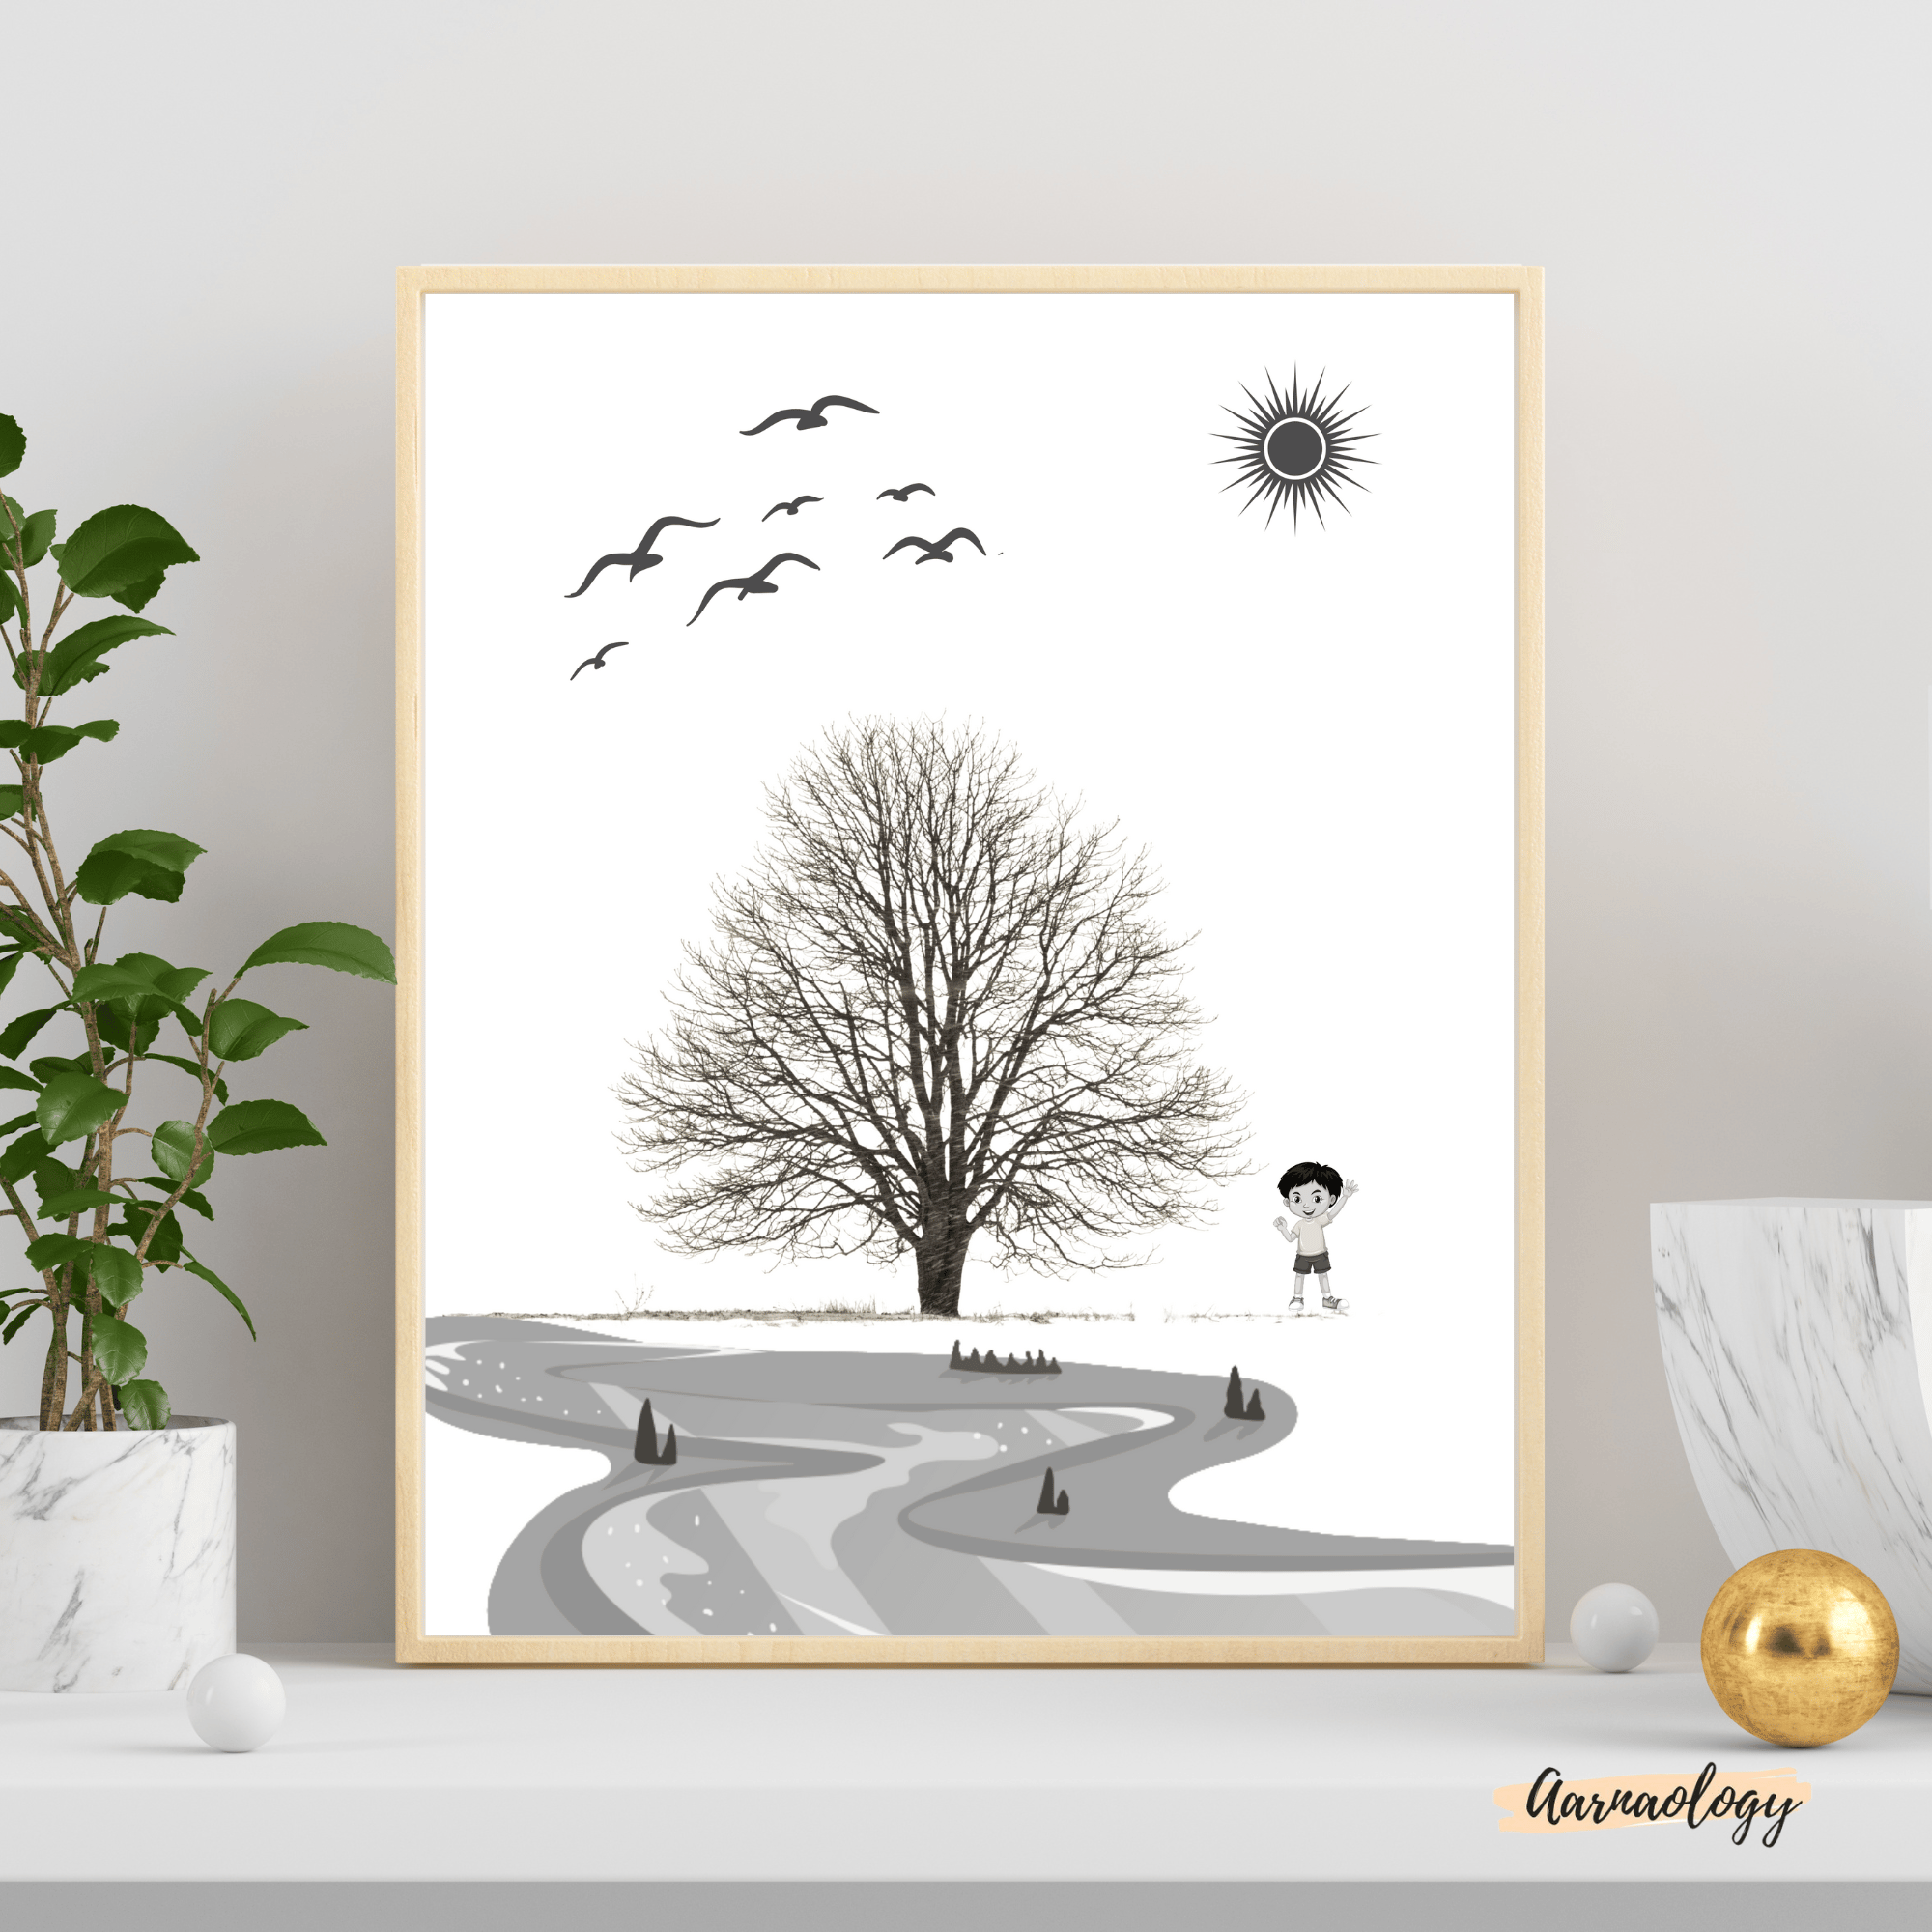 The Great Adventure Awaits: Boy, Tree, Birds, Sun, River Wall Decor Poster Peaceful Retreat Wall art Serene Scene Wild and Free